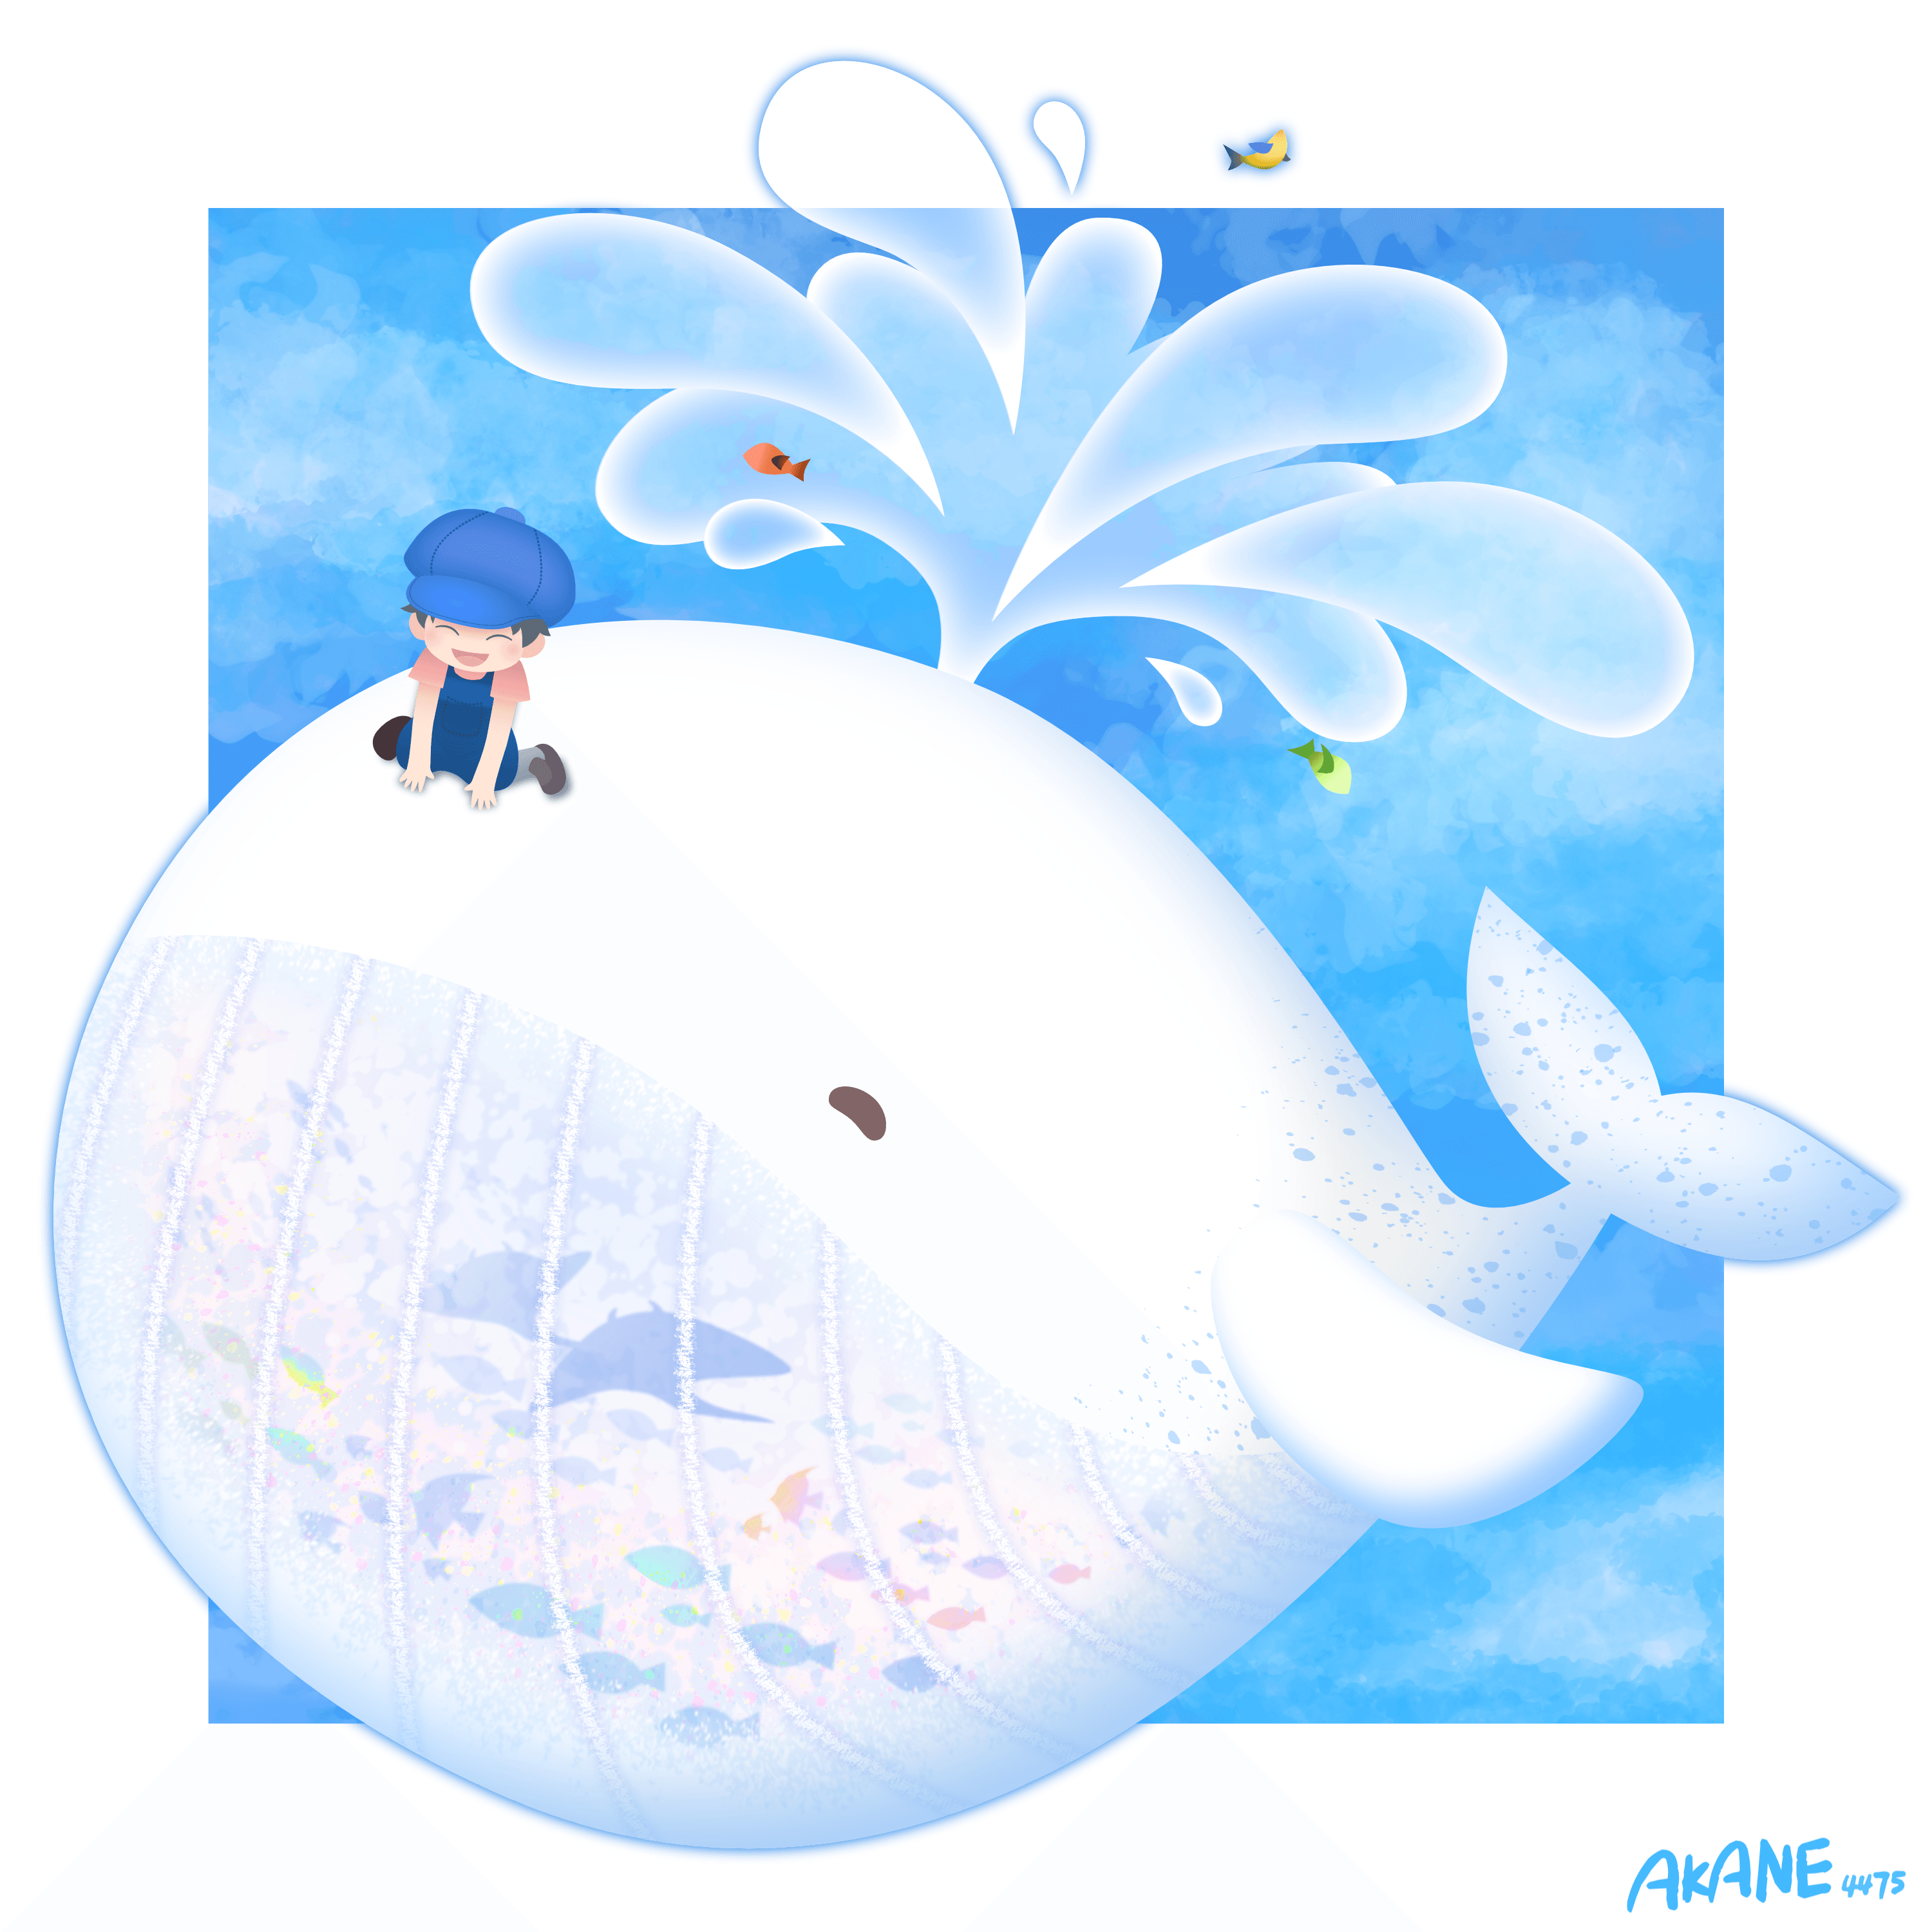 The Flying Whale Aquarium